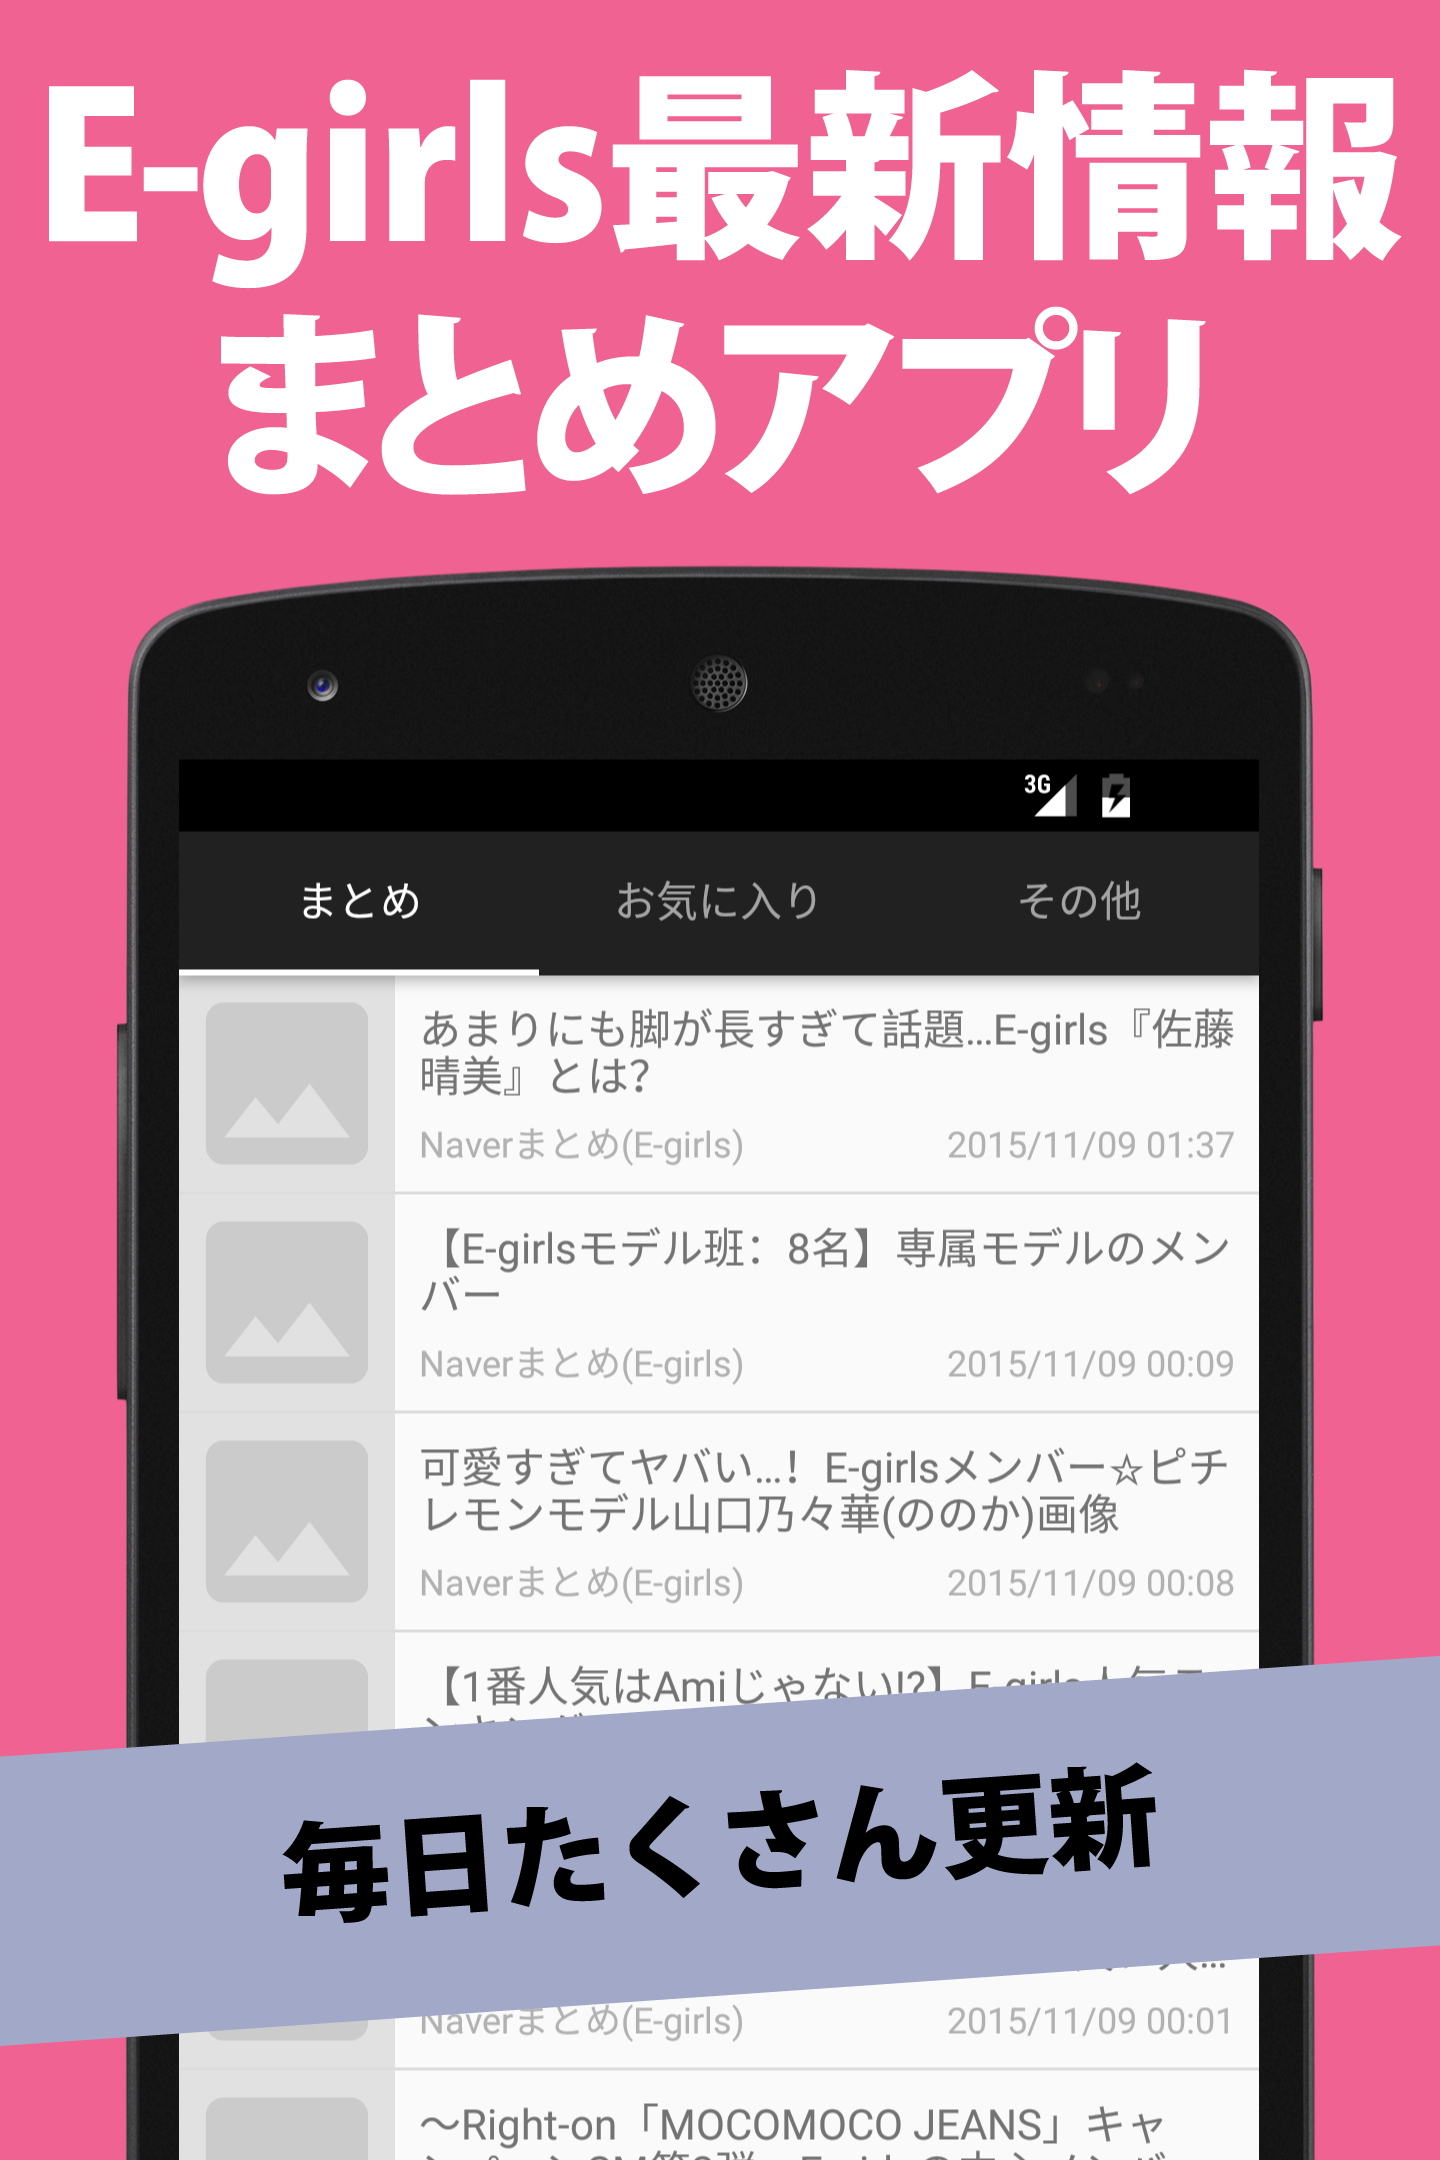 Android application Egまとめ for E-girls screenshort